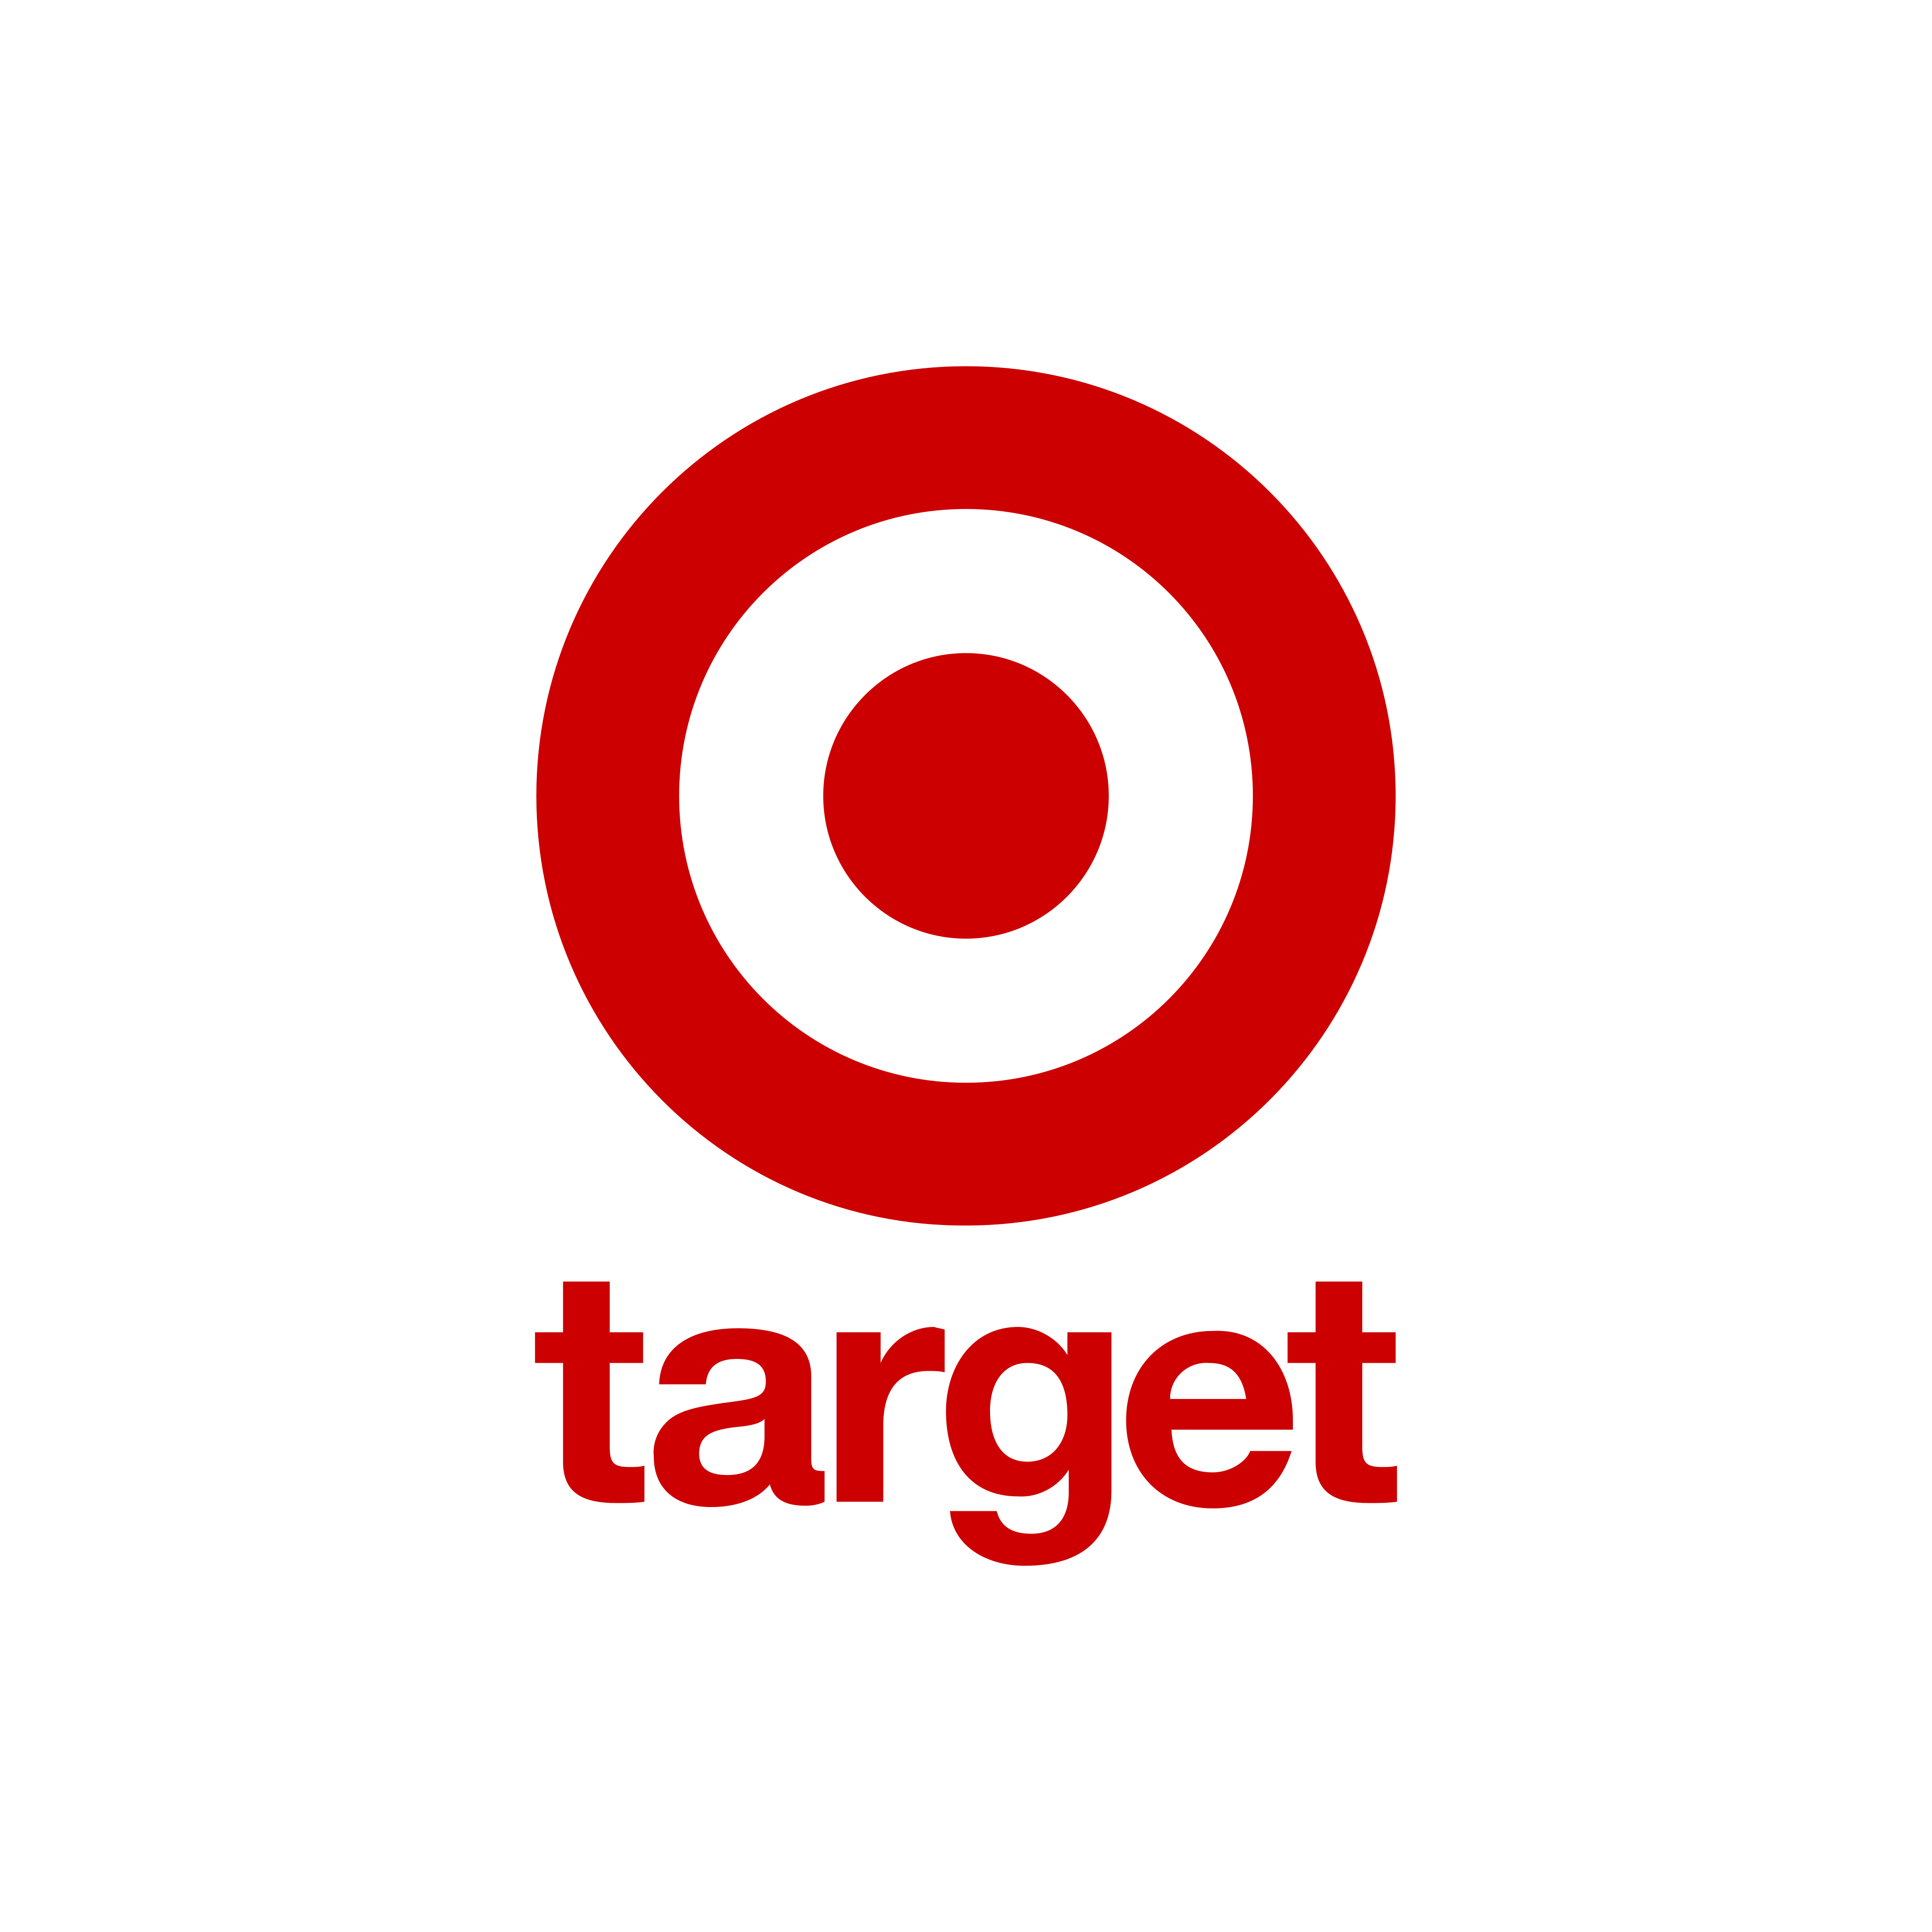 Target. Target logo. Таргет-центр. Target Company logo.